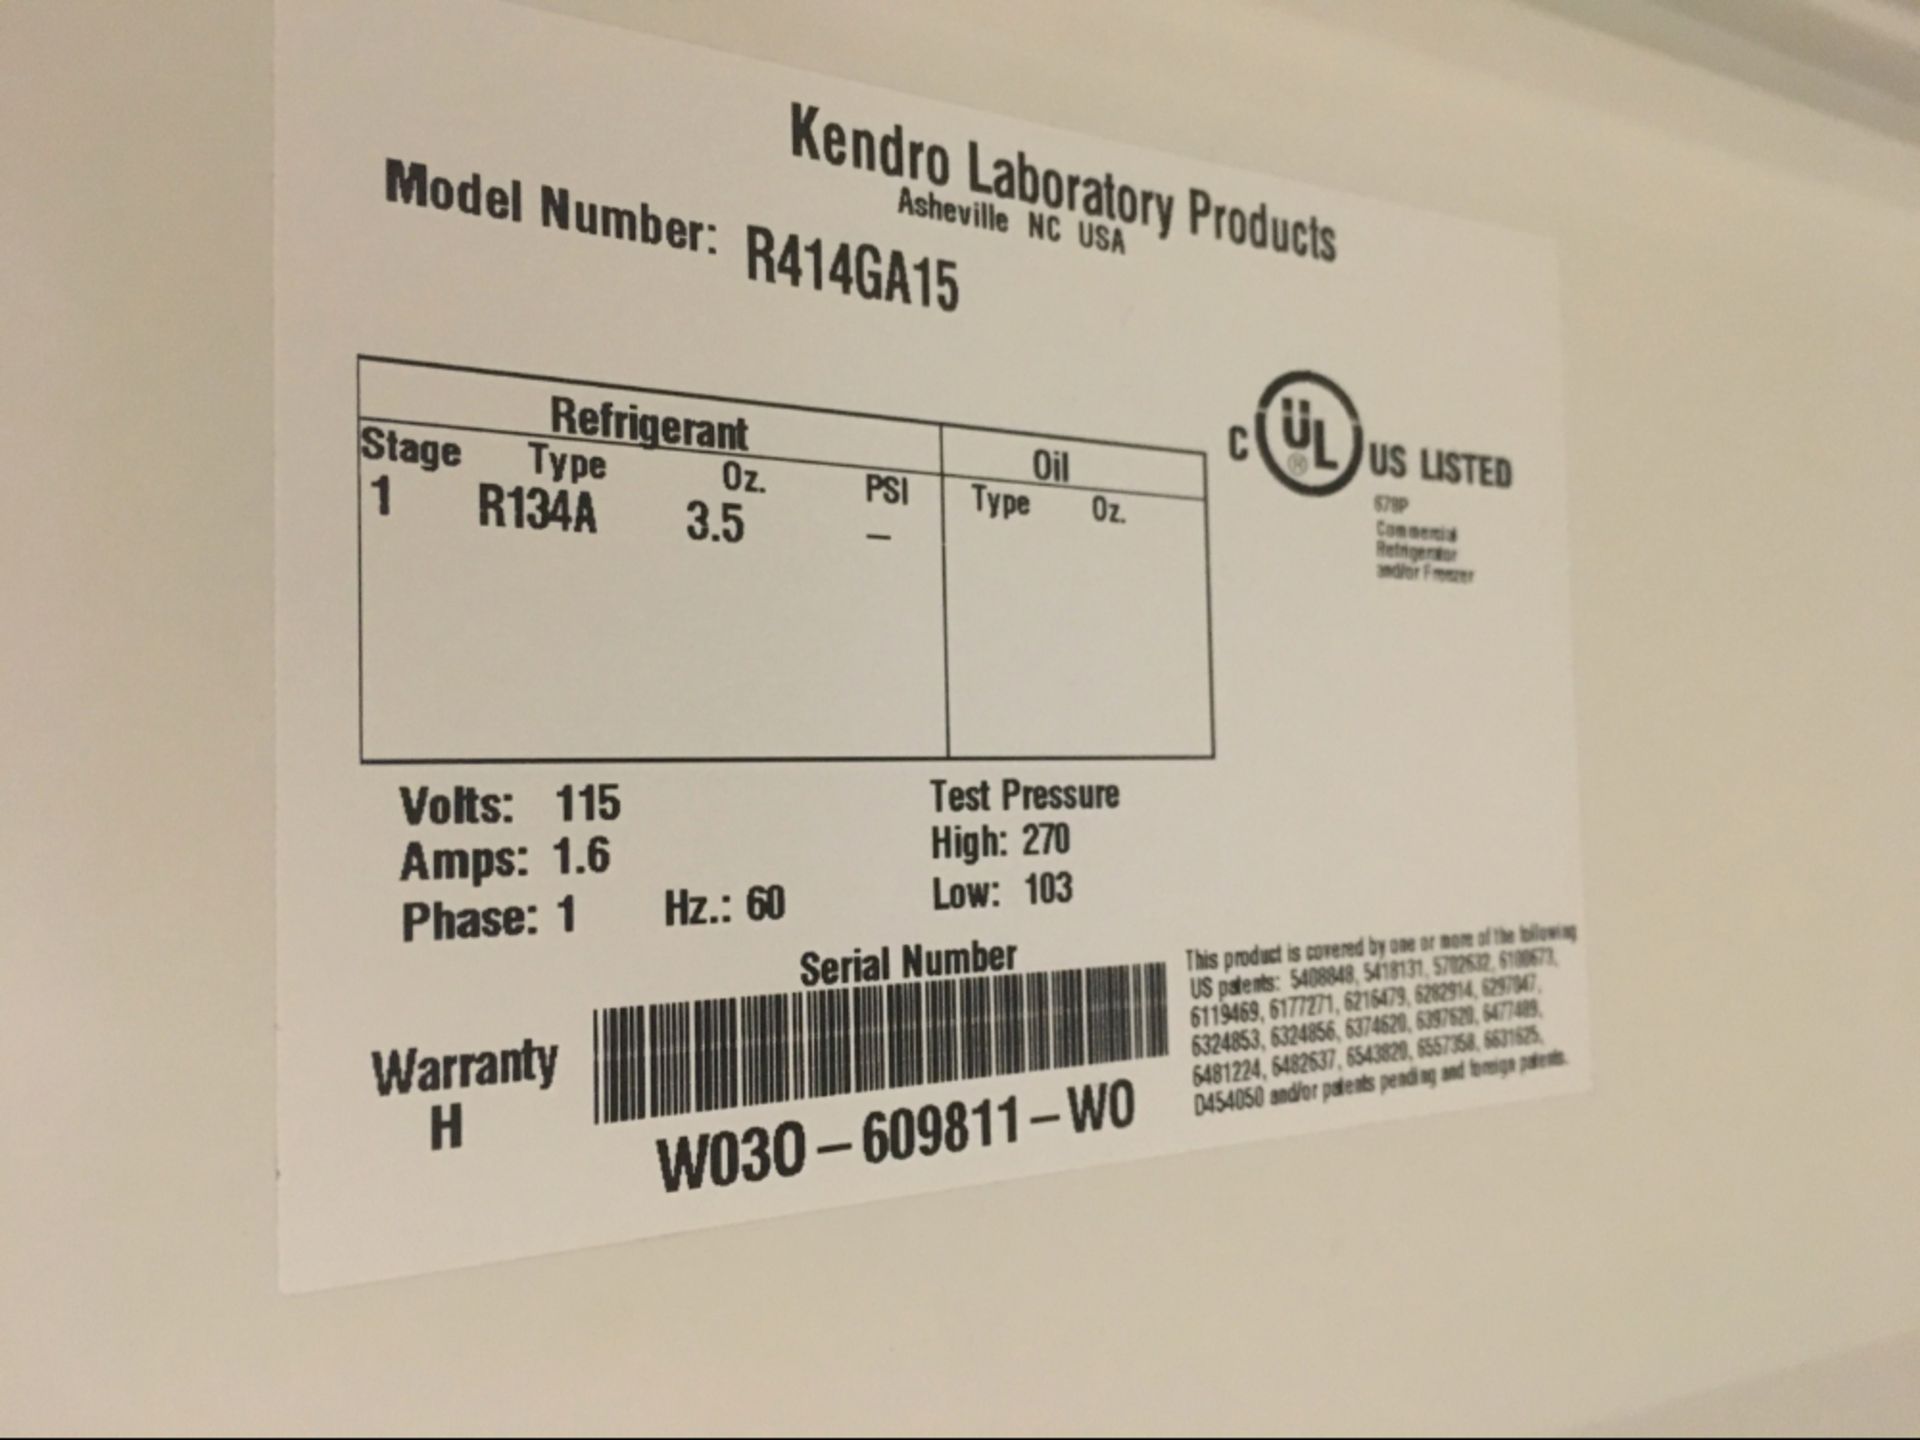 VWR Kendro Laboratory R414GA15 Laboratory Refrigerator - Image 2 of 2